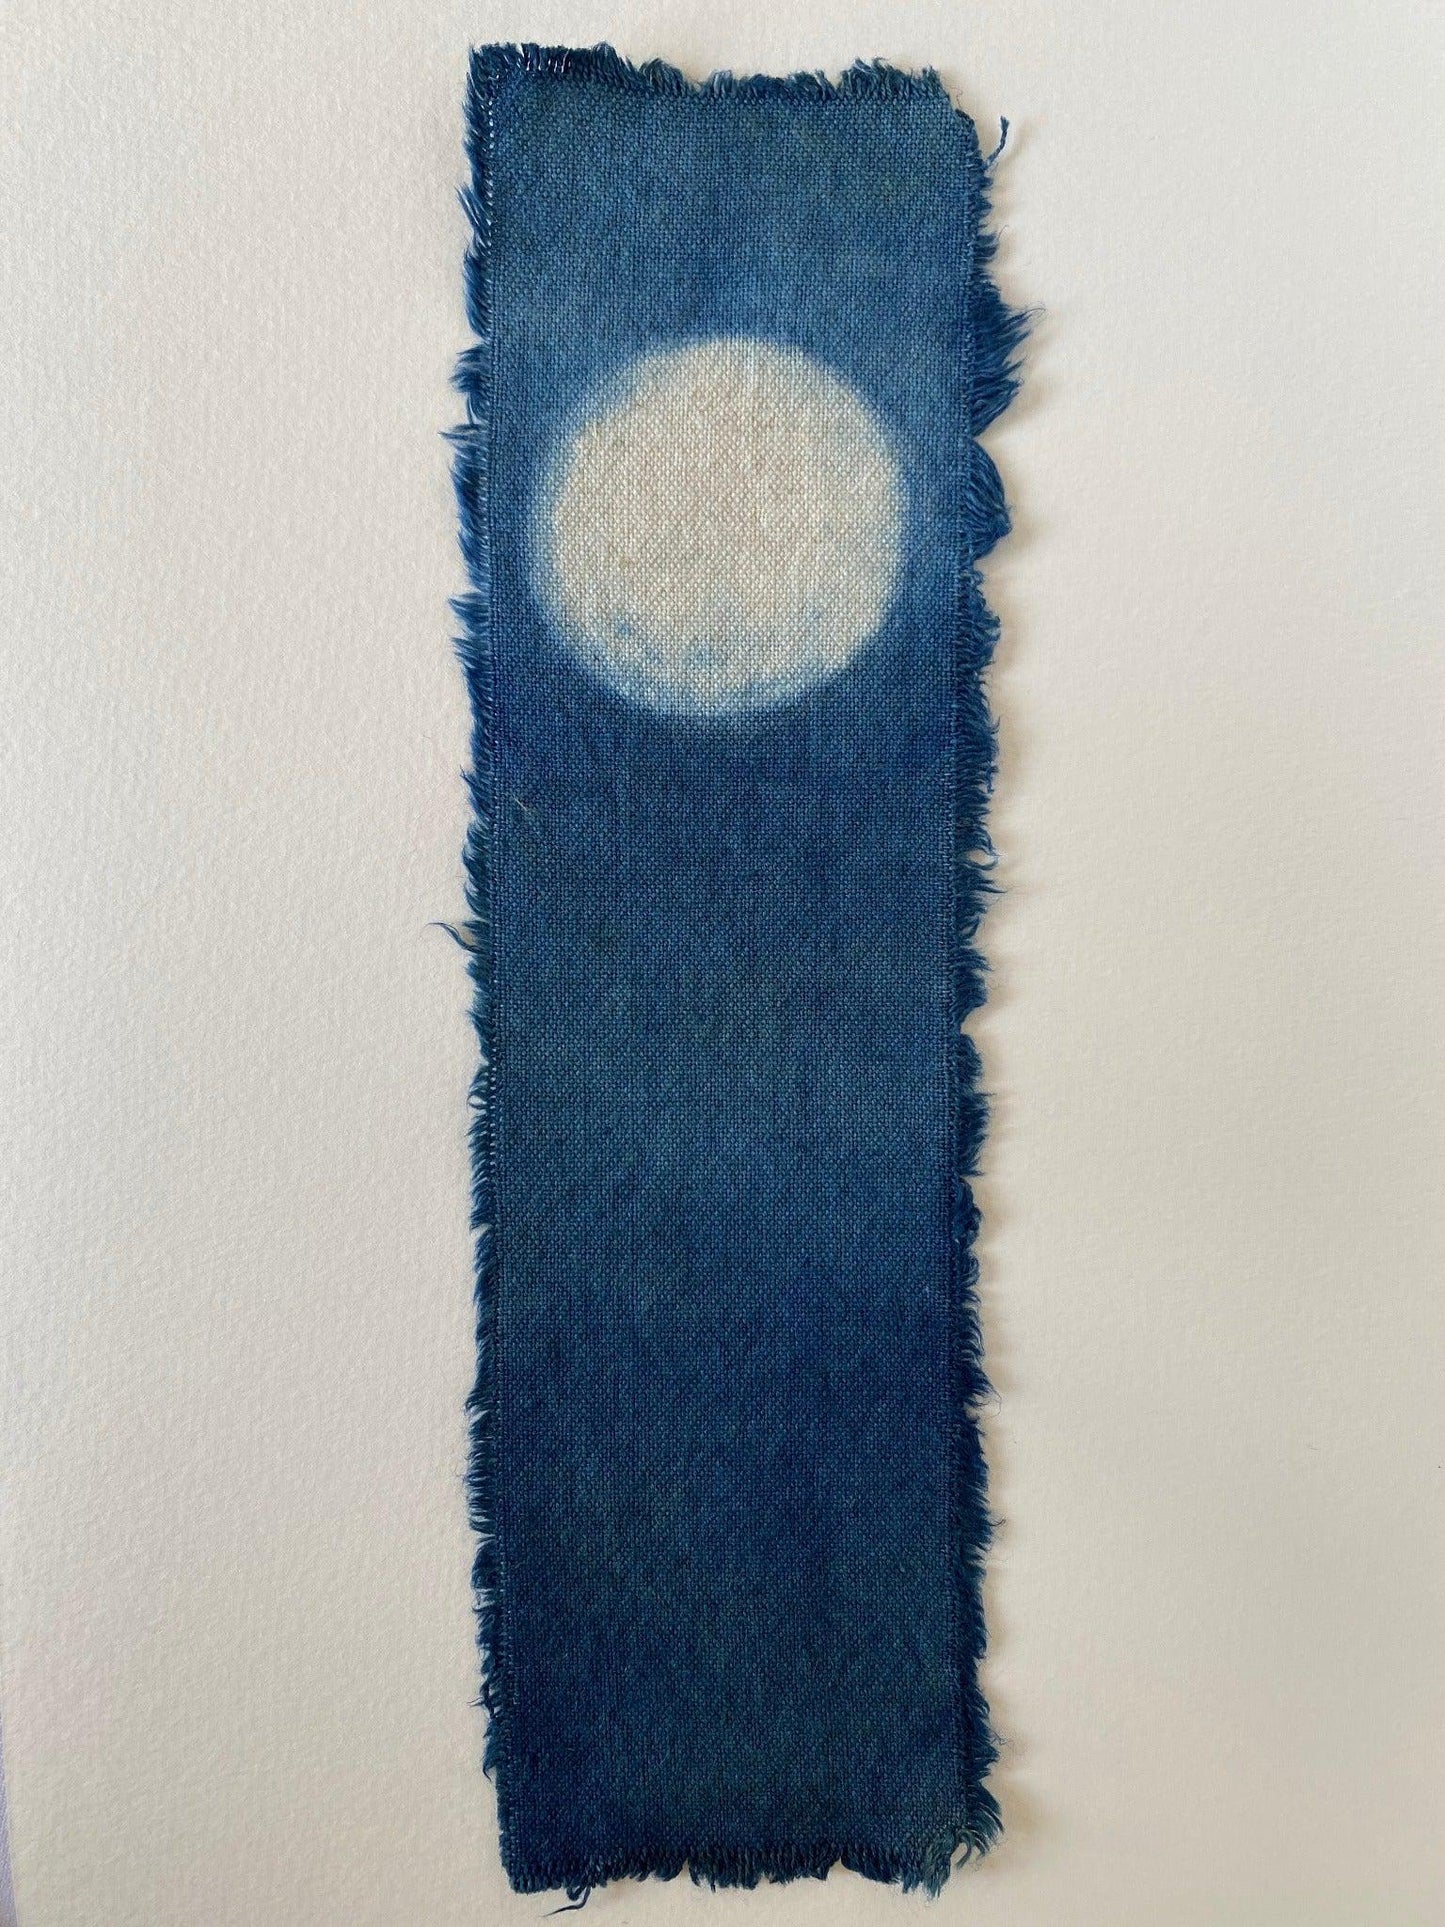 Full Moon Bookmark